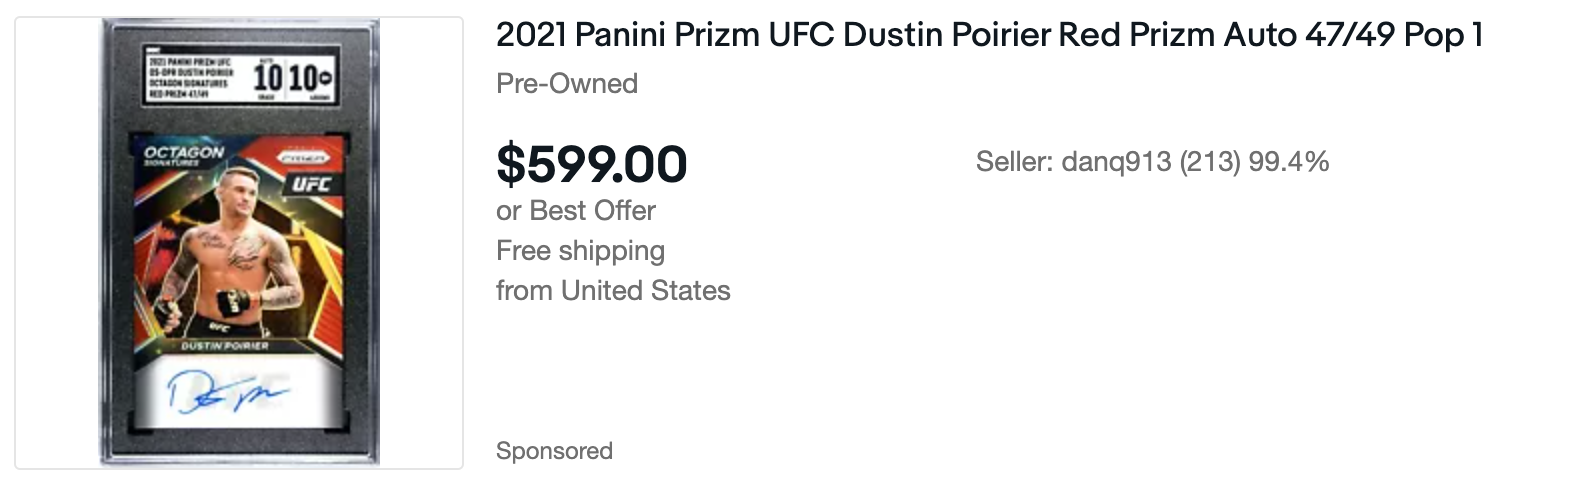 Dustin Poirier Featured Listing